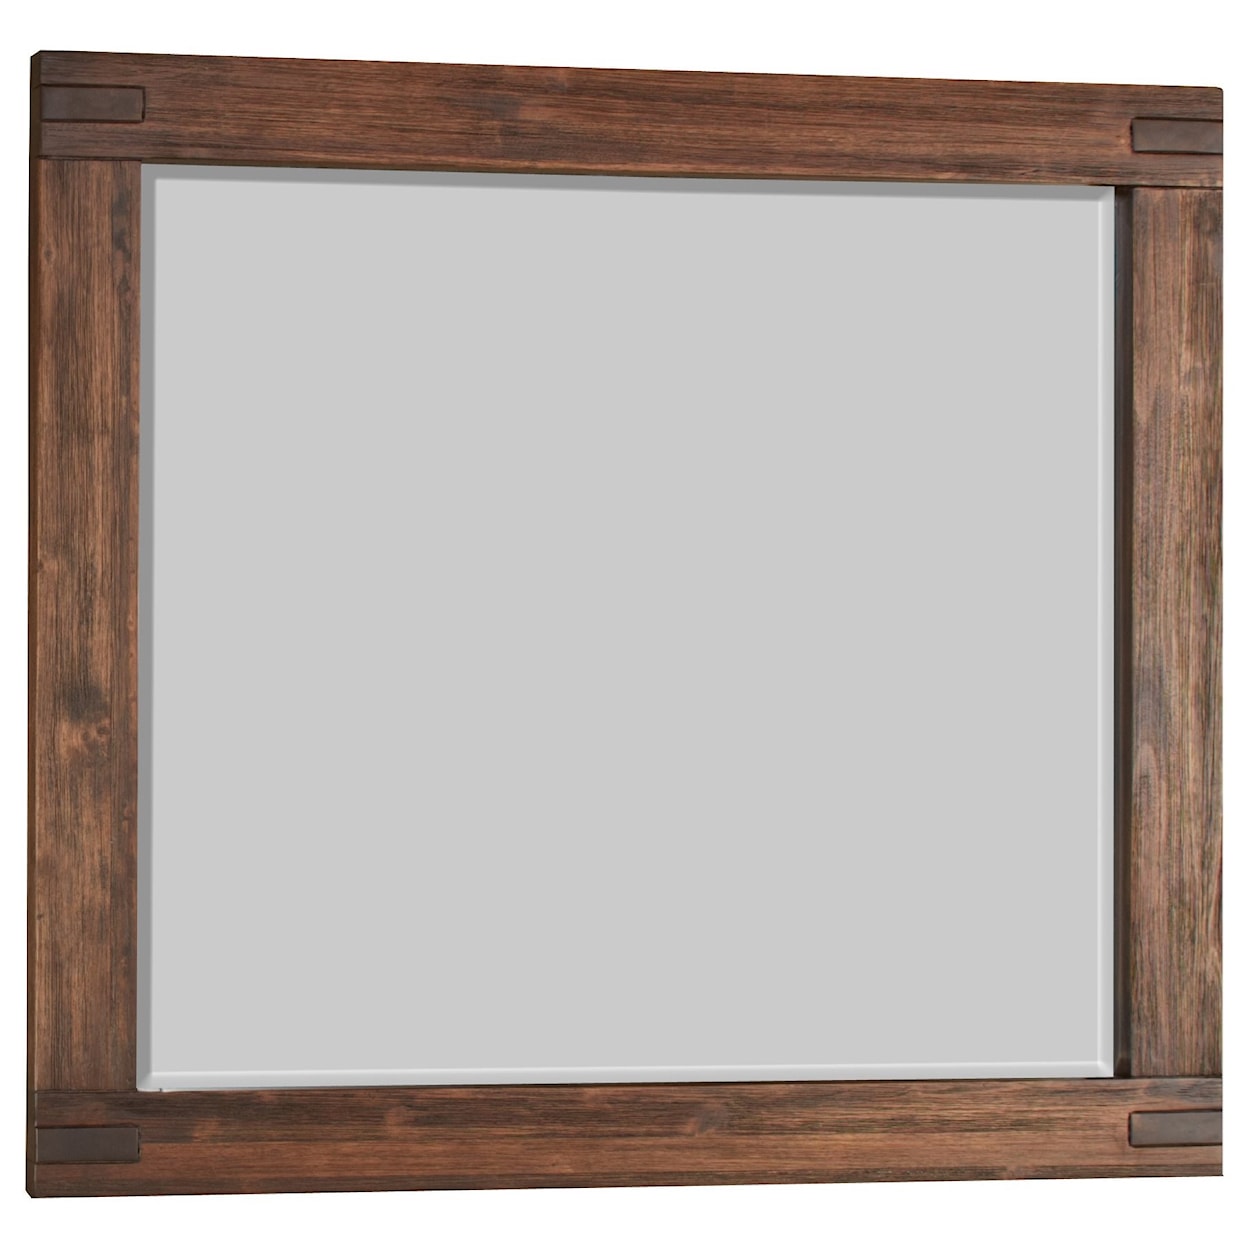 Modus International Meadow Mirror with Wood Frame